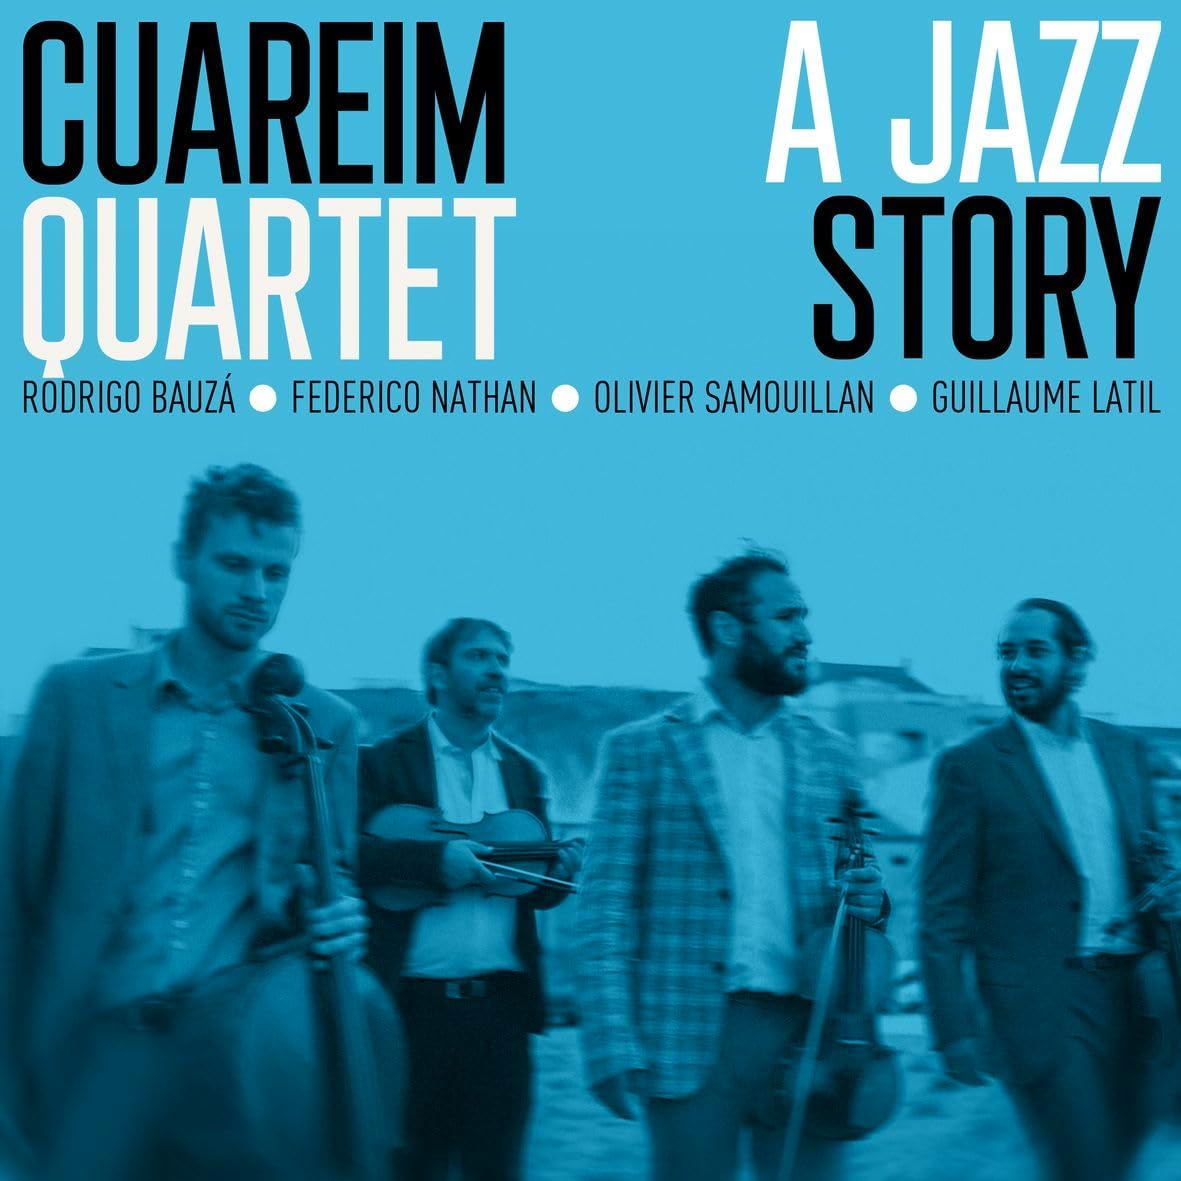 Cuareim jazz story